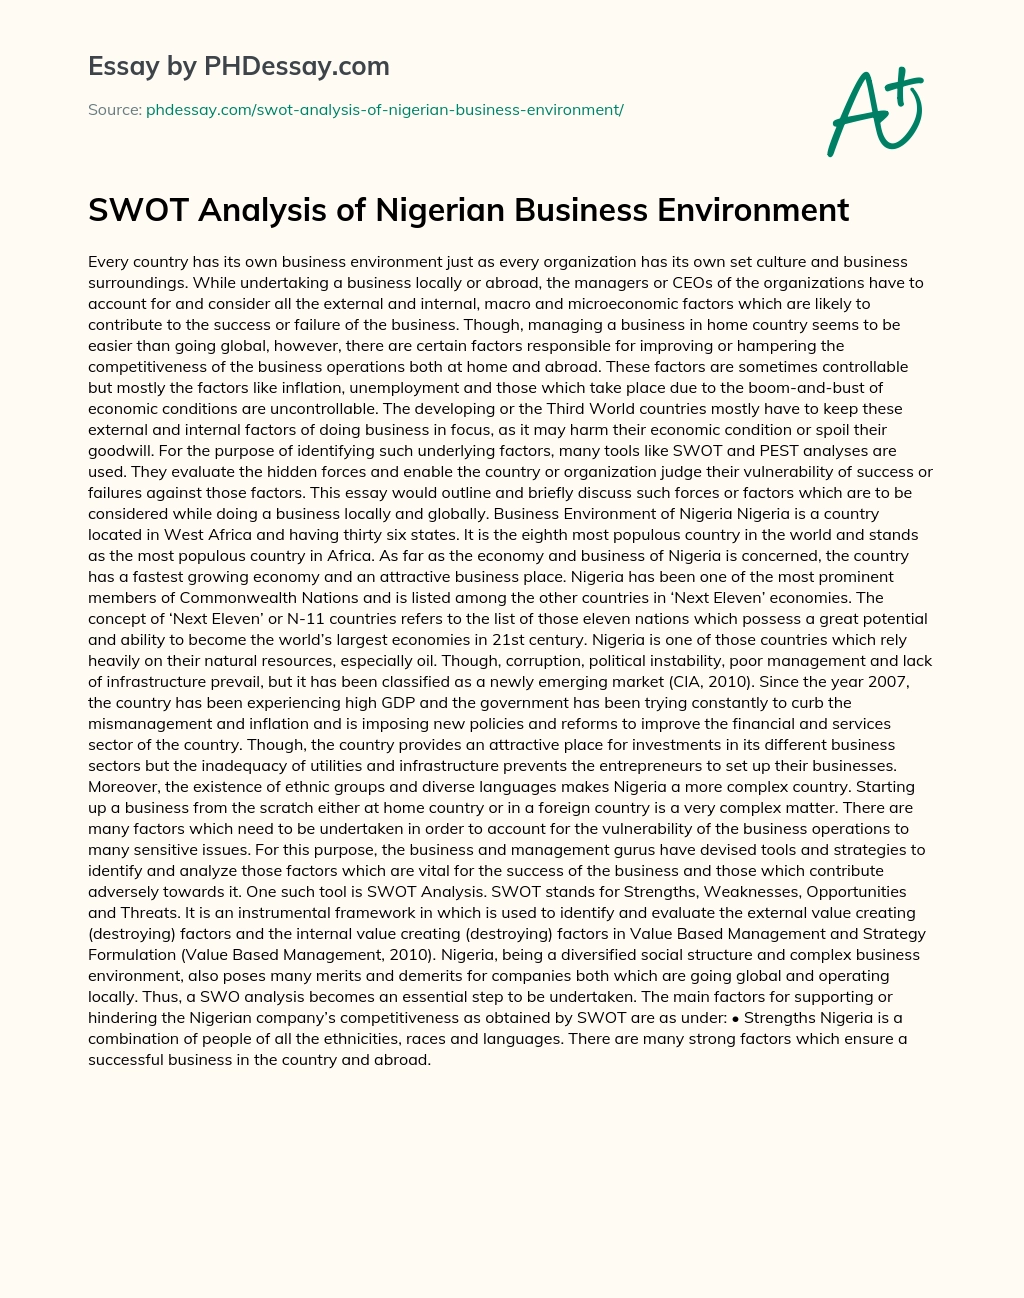 SWOT Analysis of Nigerian Business Environment essay